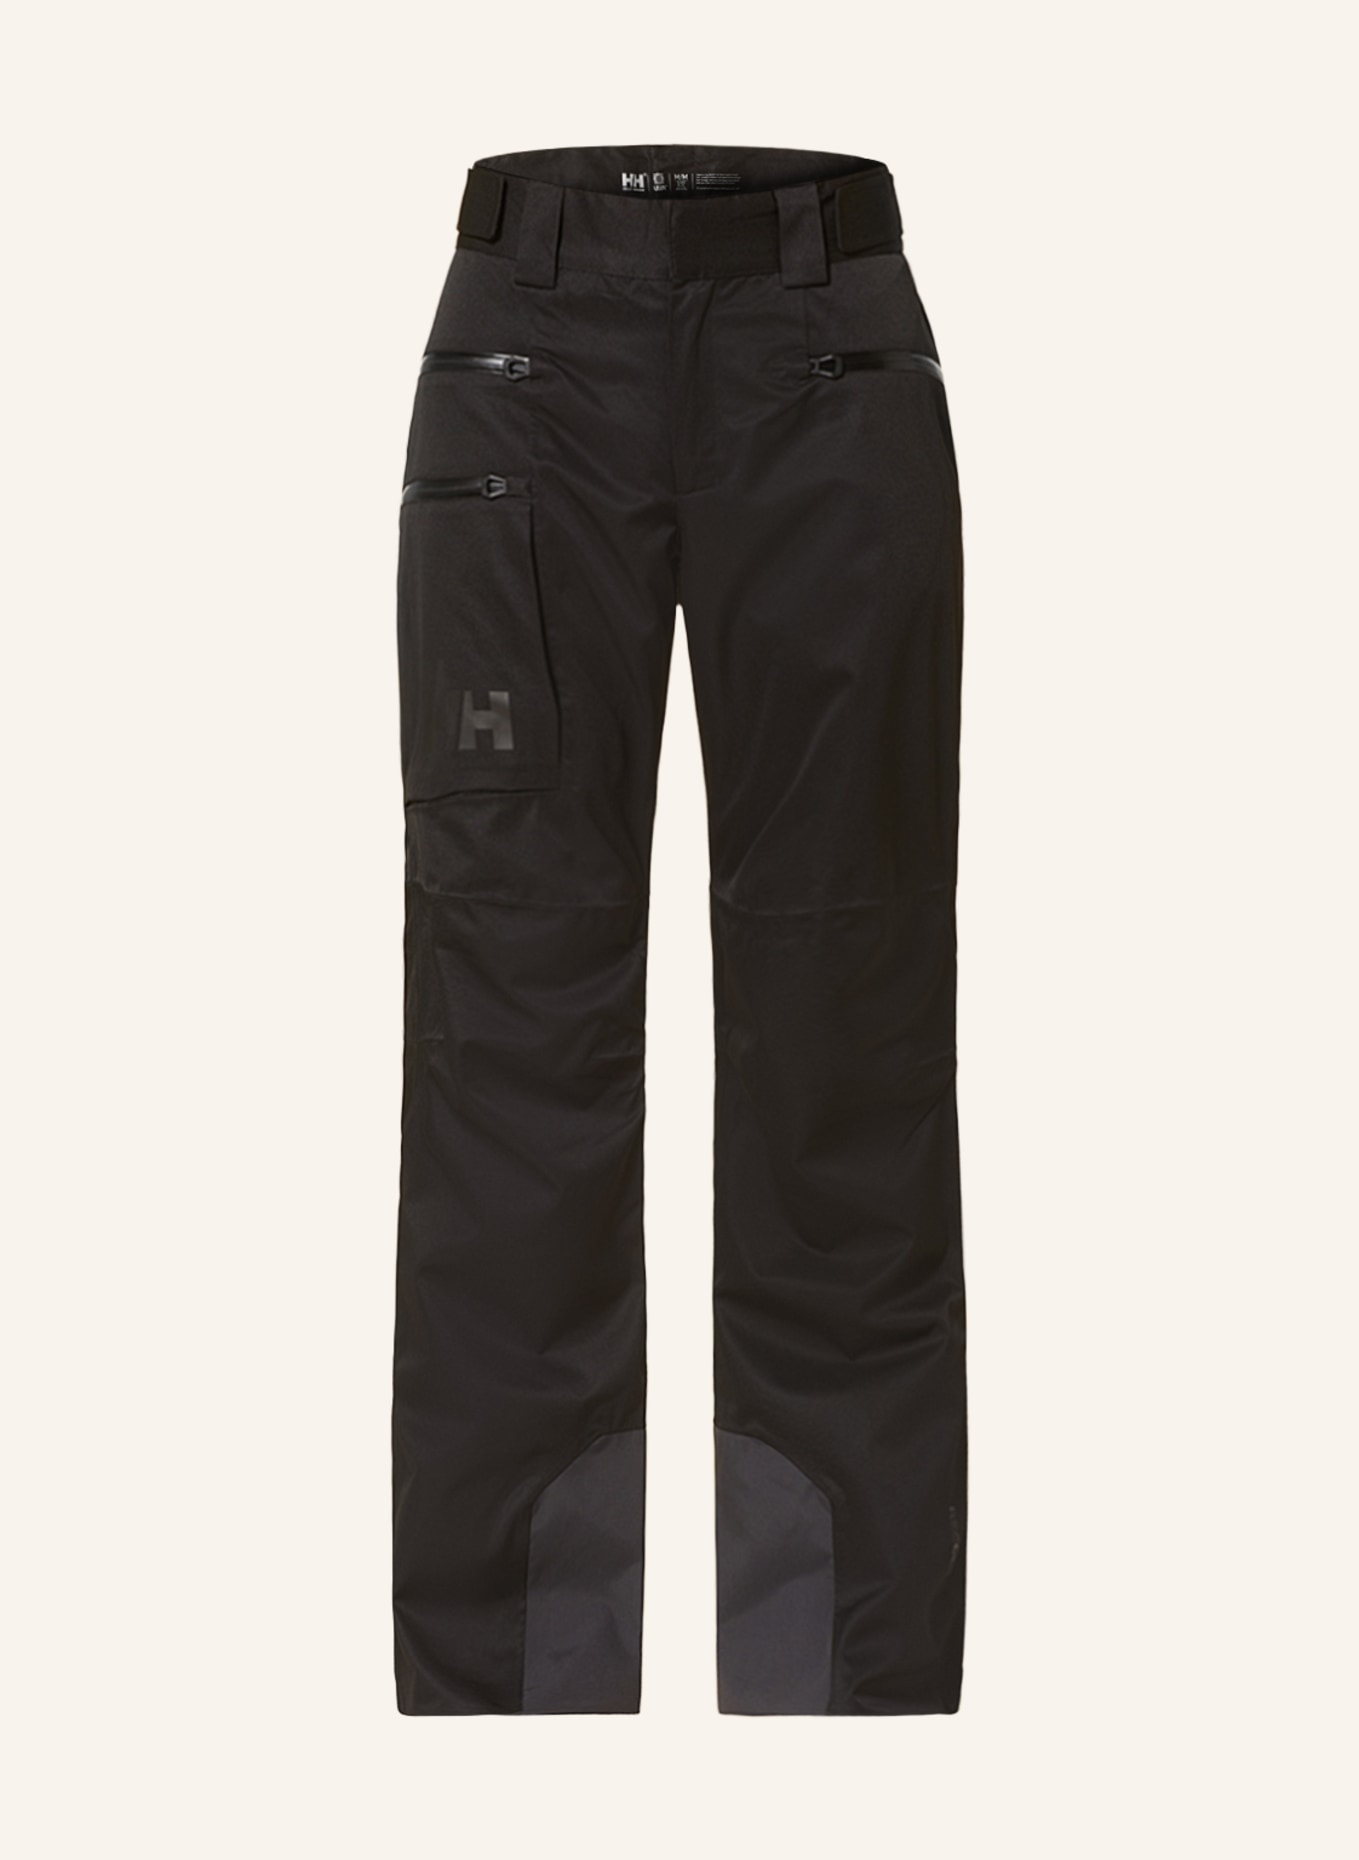 Helly Hansen Men's Alpine Insulated Ski Pants 606 DEEP FJORD Size Large NWT  | eBay